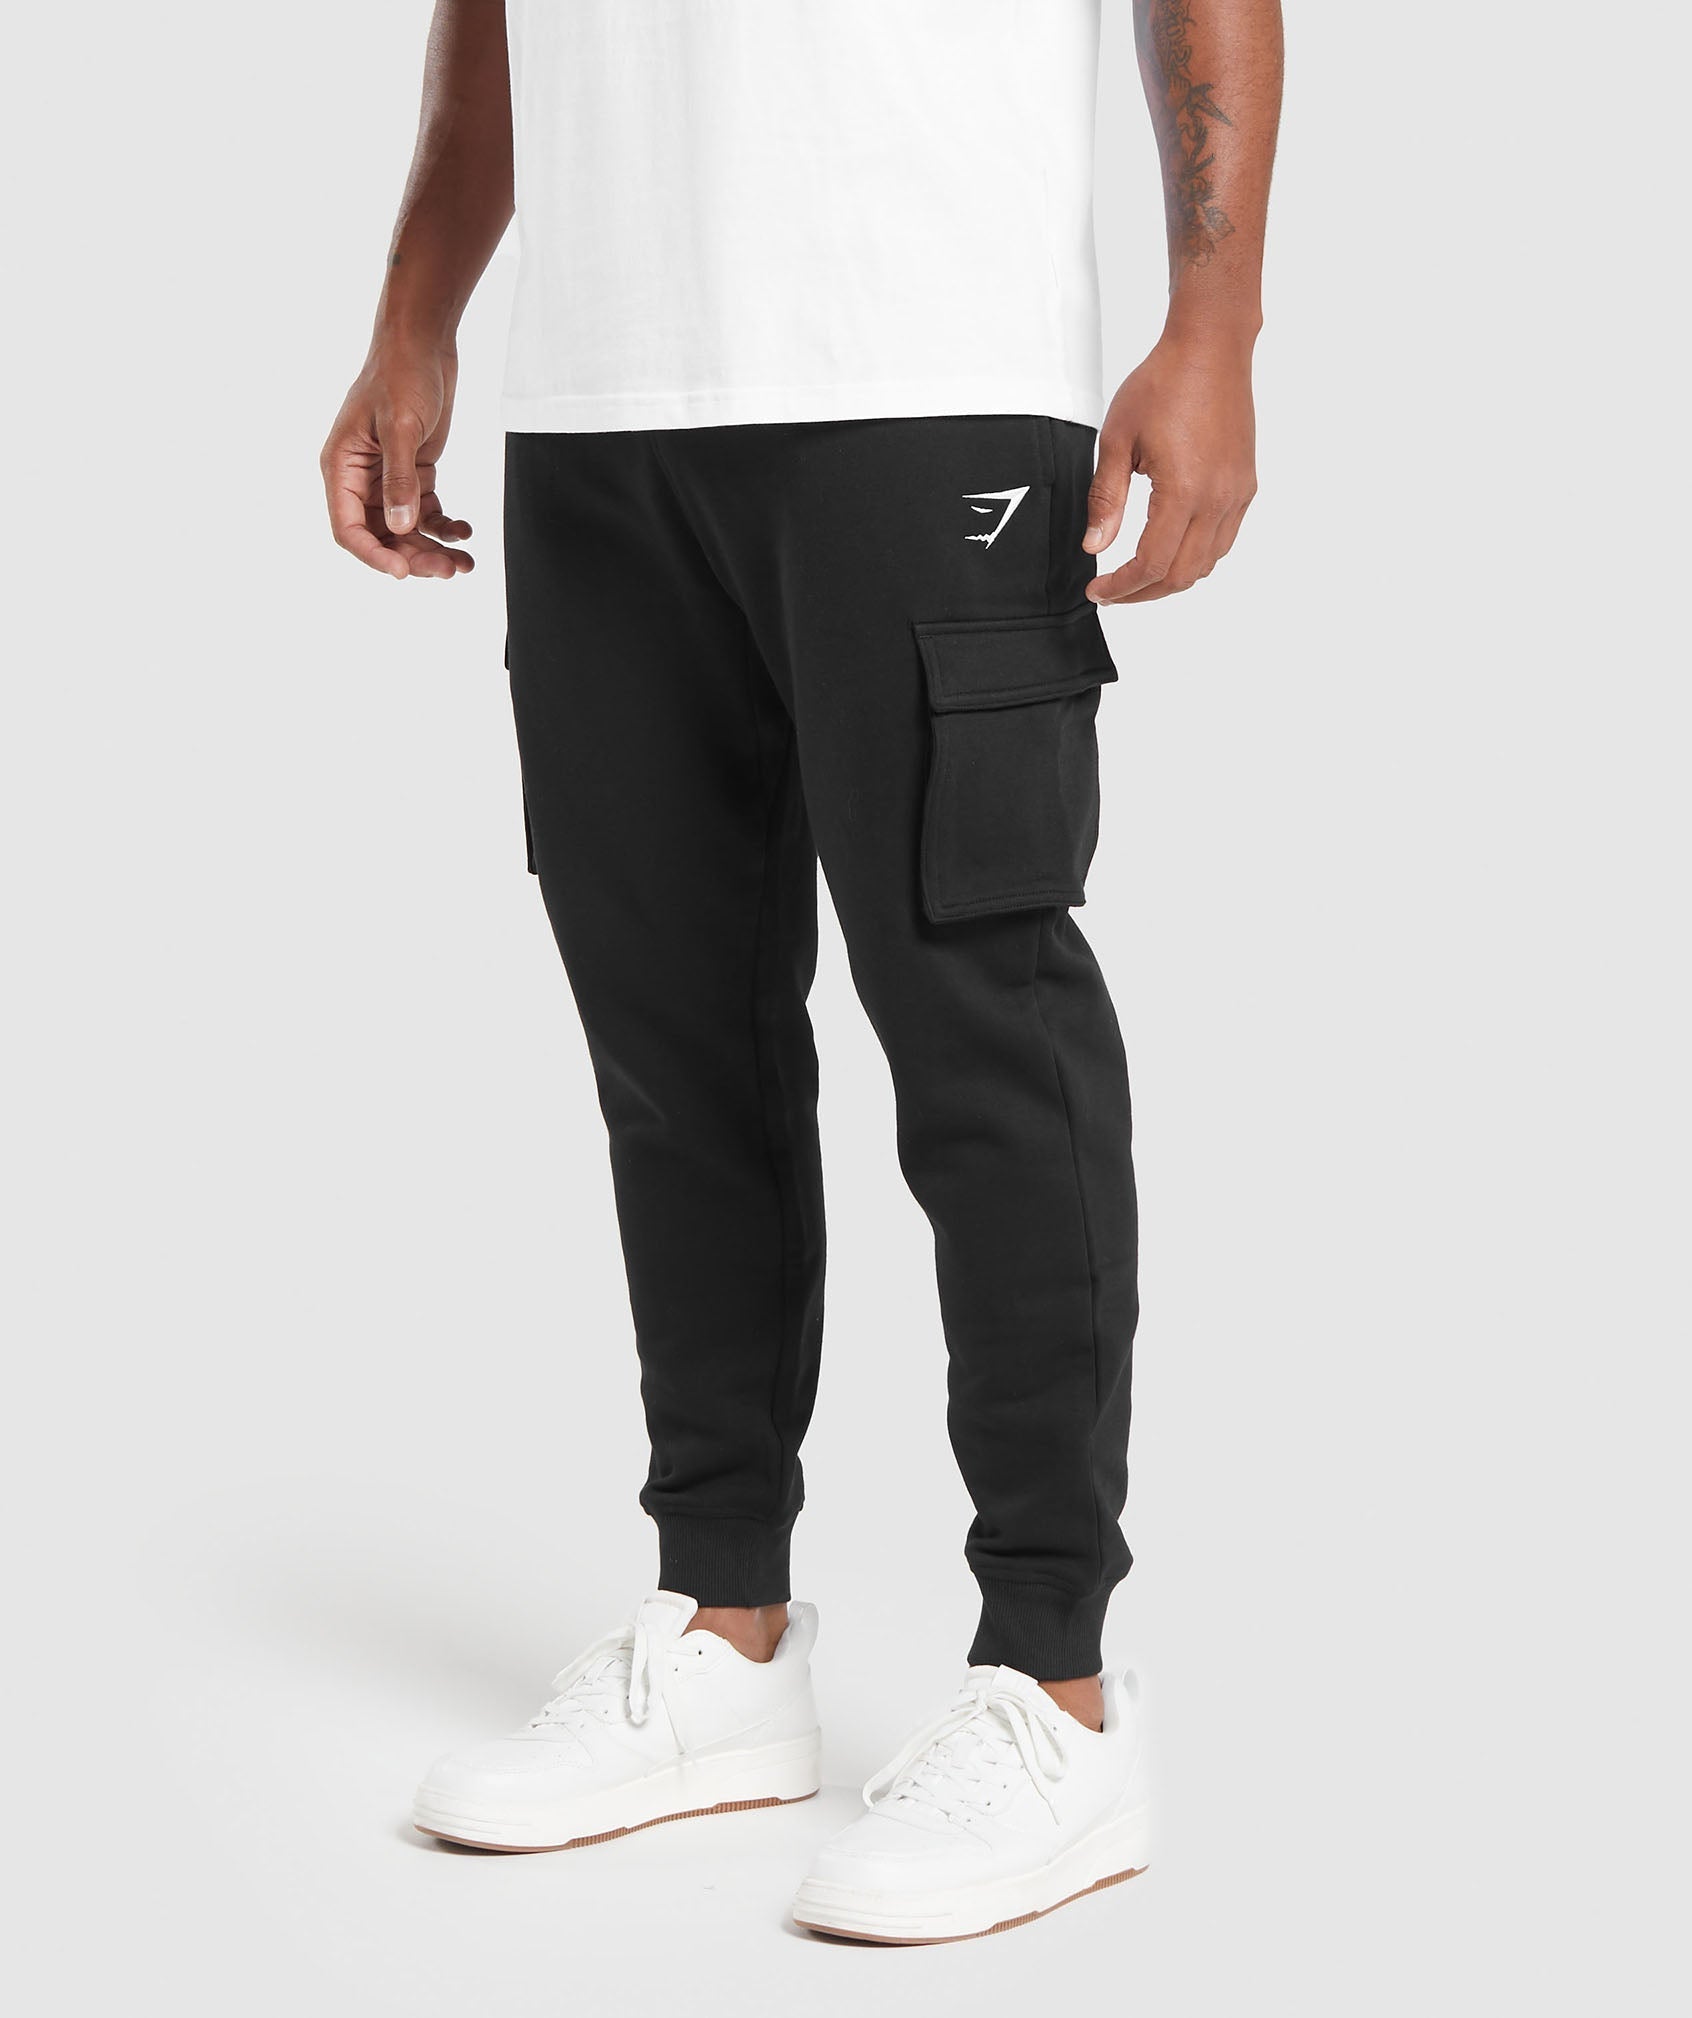 Vintage Nike The Athletic Dept Black M Unisex Polyester Sweatpants White  Stripe